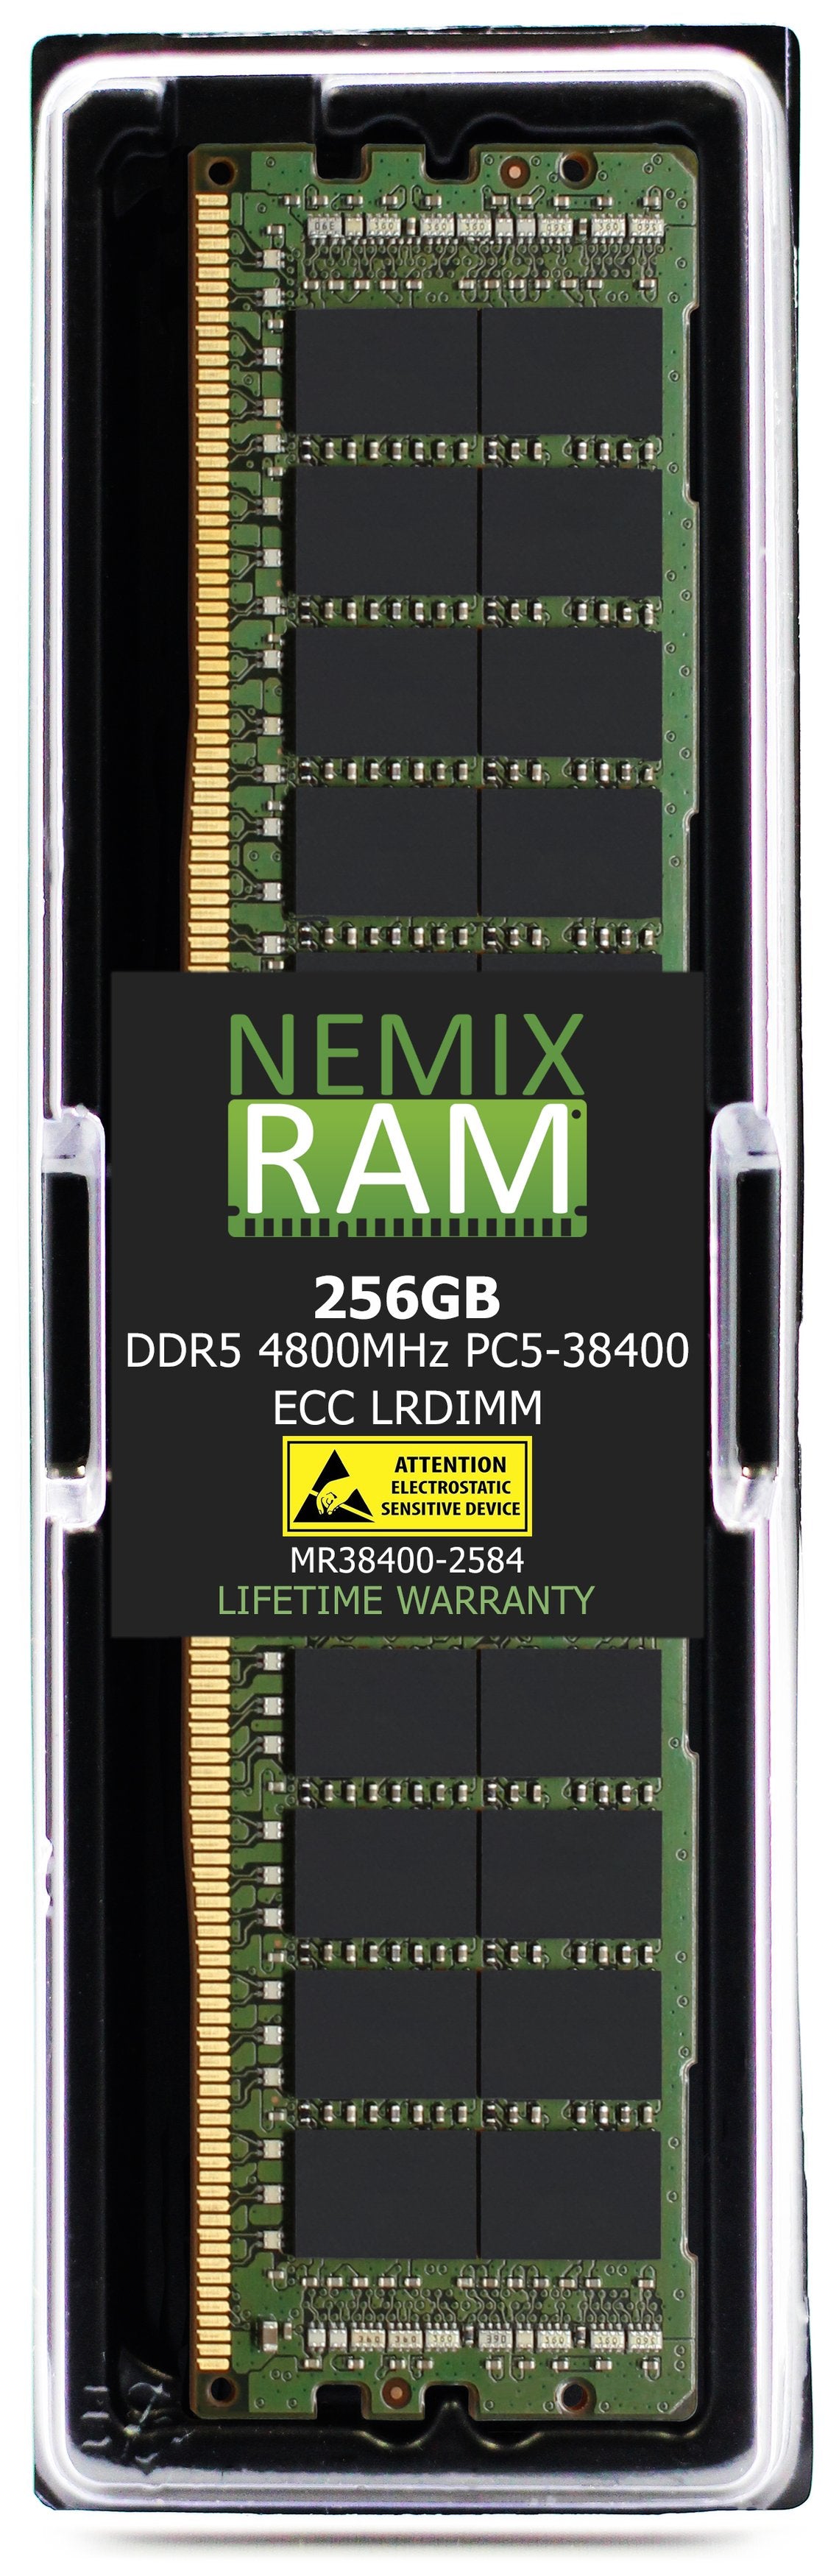 DELL PowerEdge R660 Rack Server Memory Upgrade